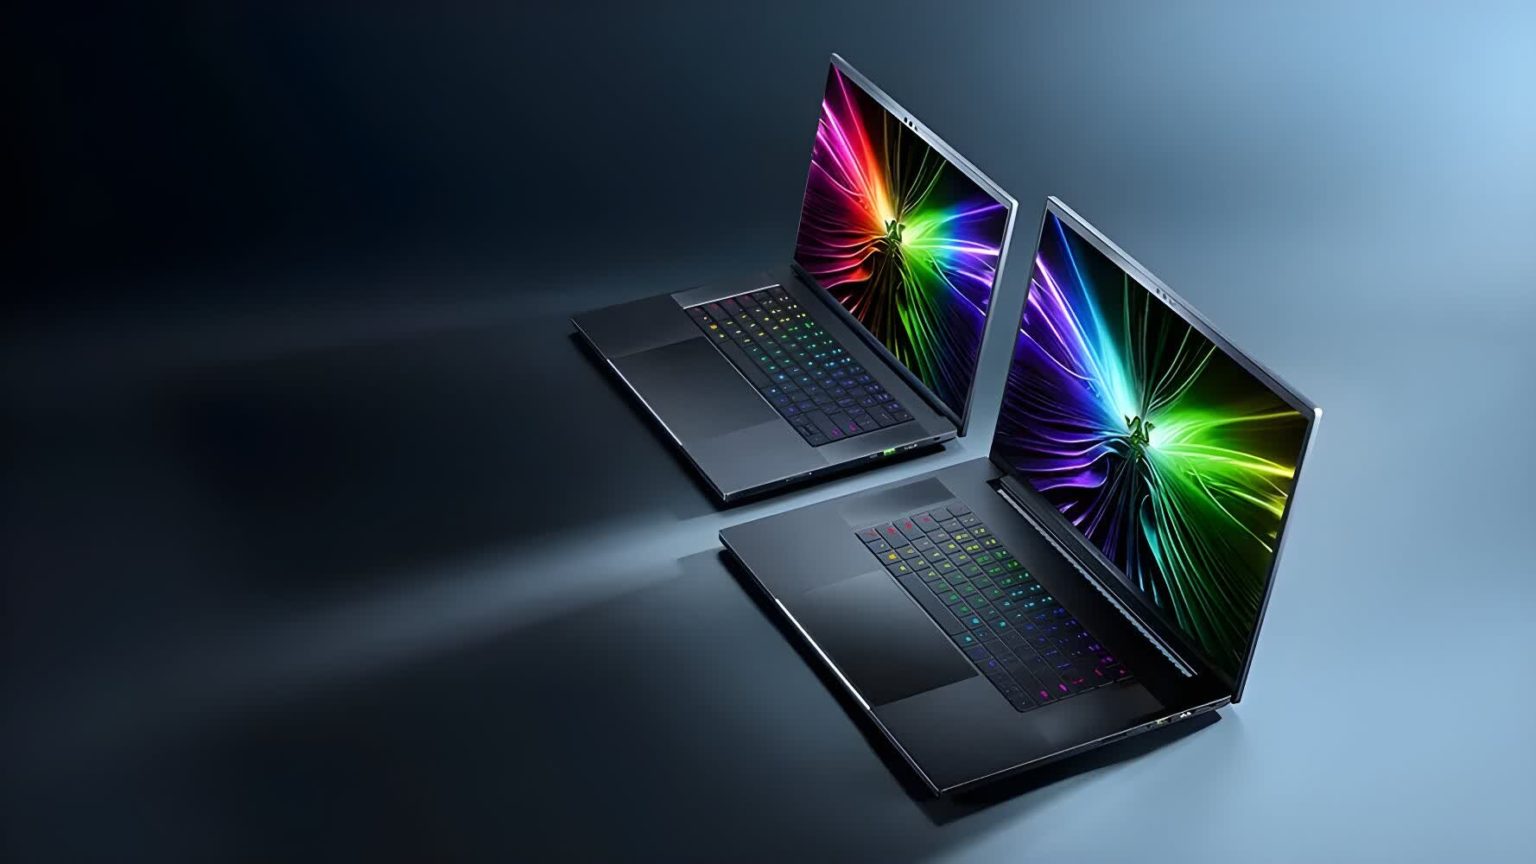 Razer teases new Blade laptops with world